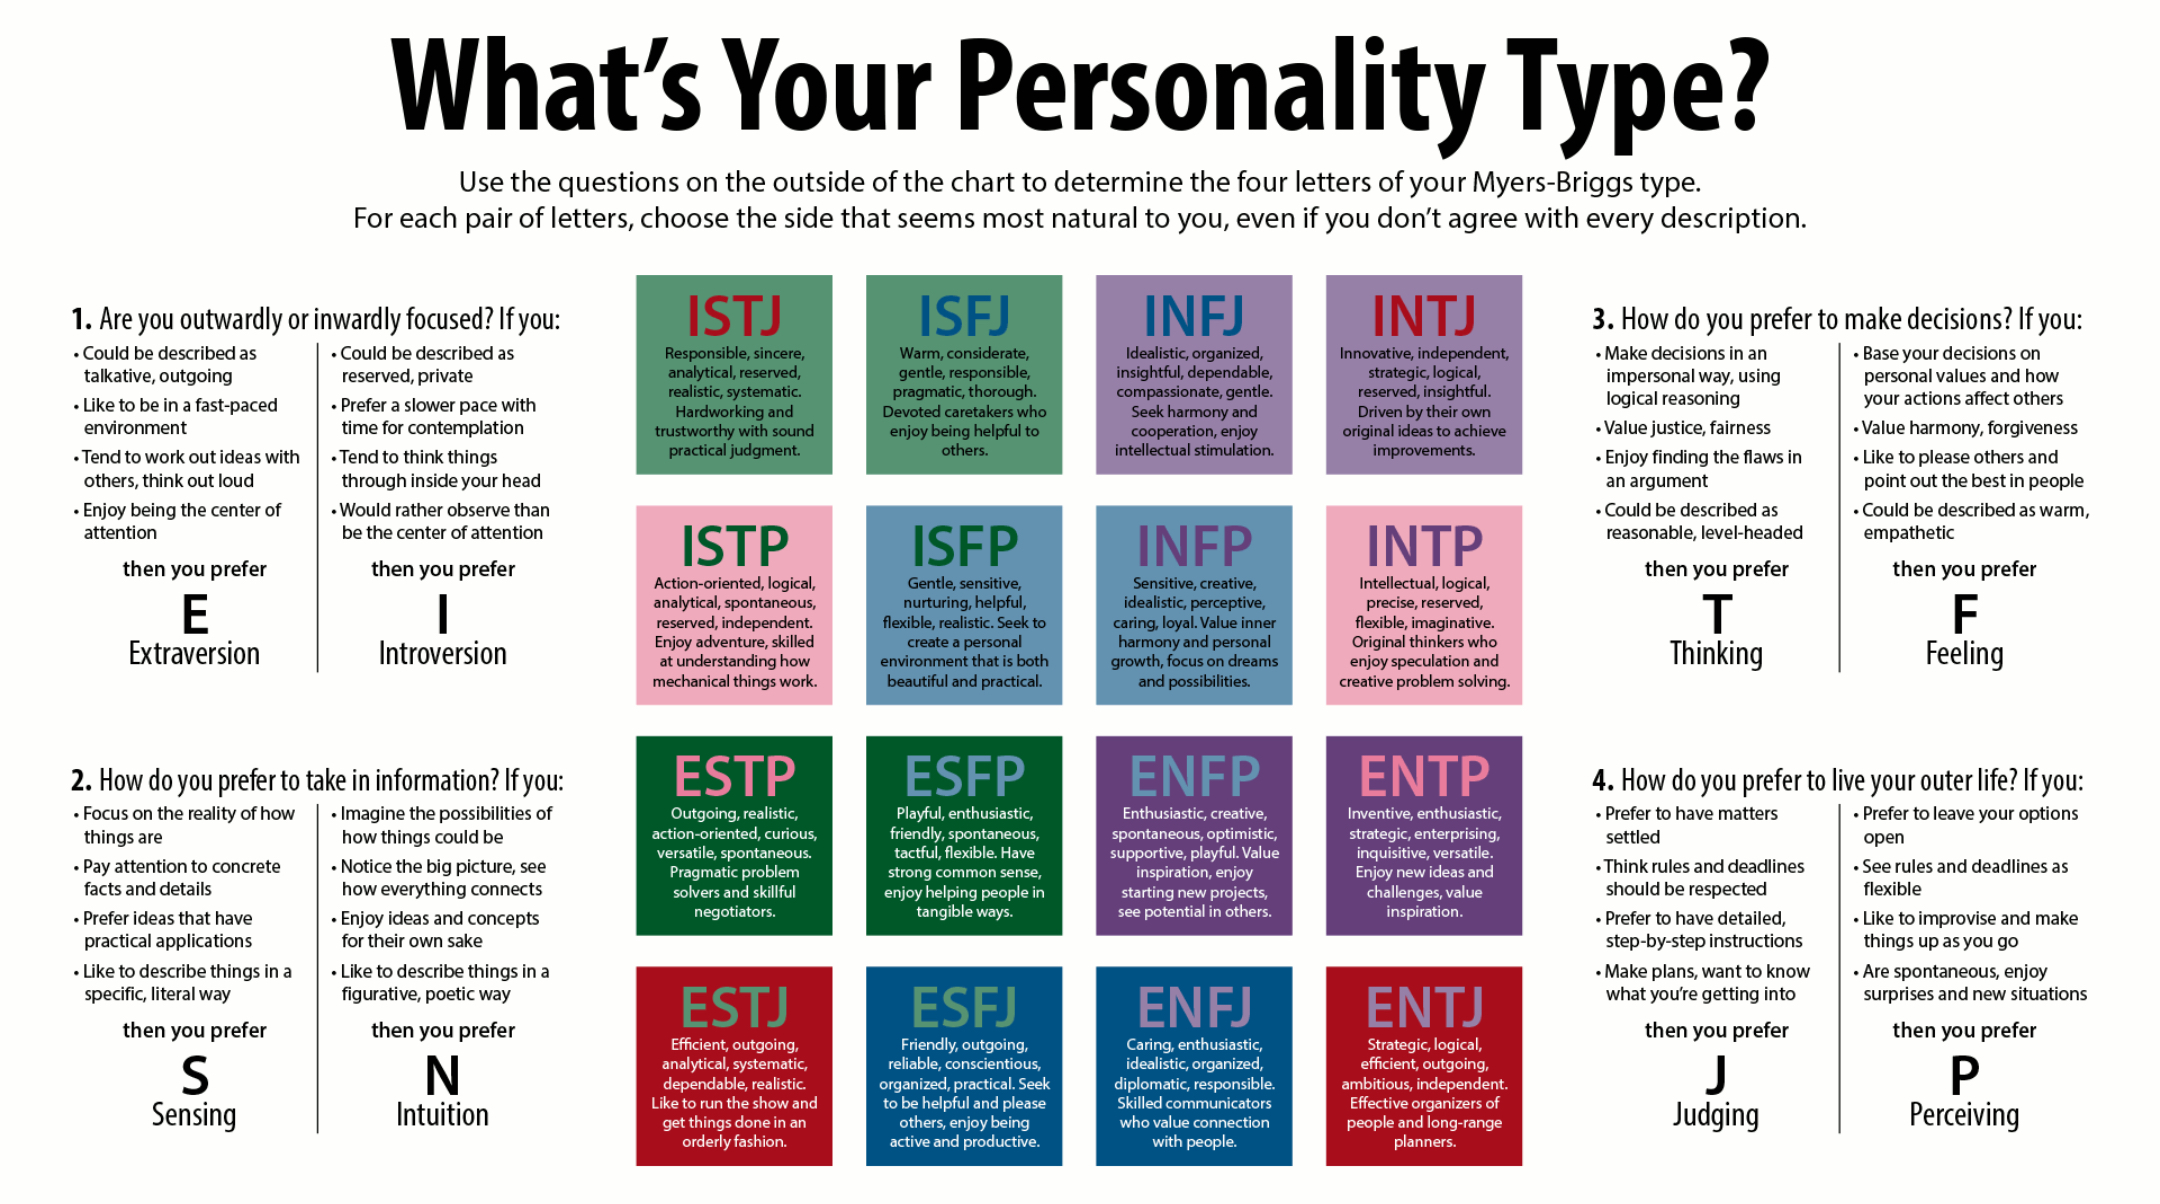 Baller MBTI Personality Type: ESTP or ESTJ?